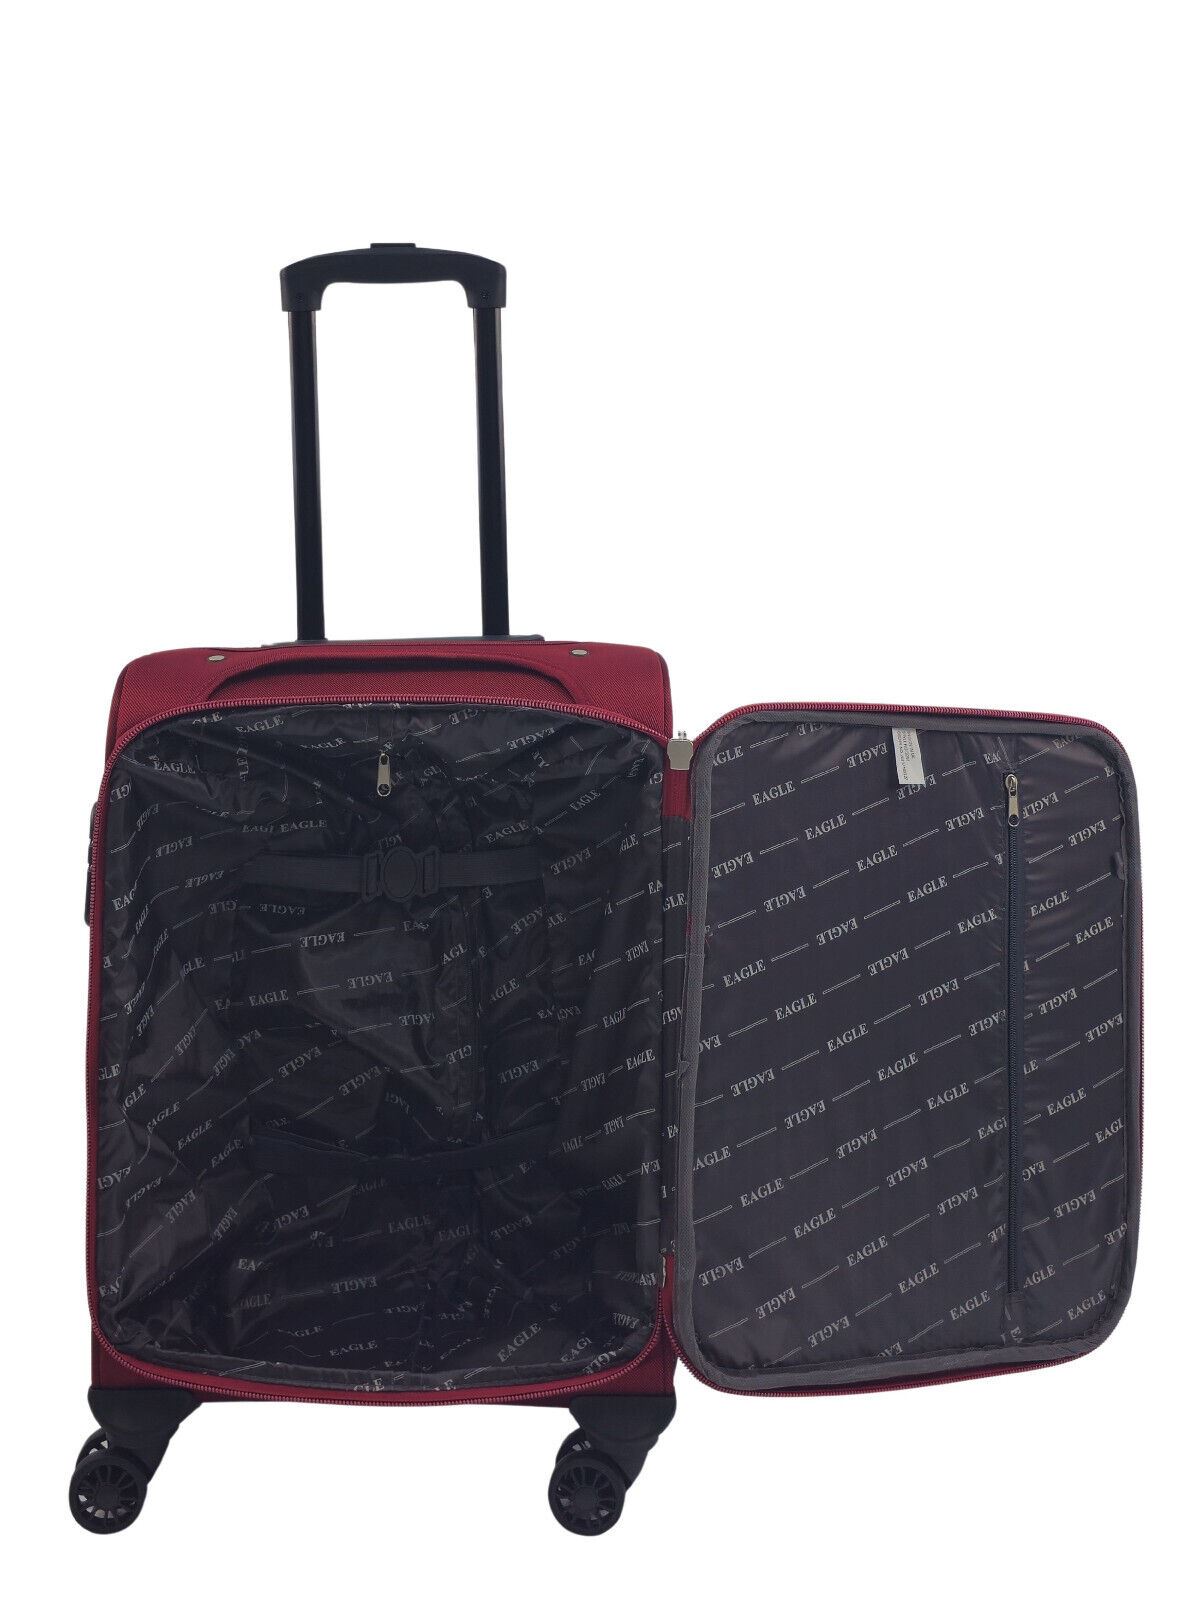 Ashland Cabin Soft Shell Suitcase in Burgundy